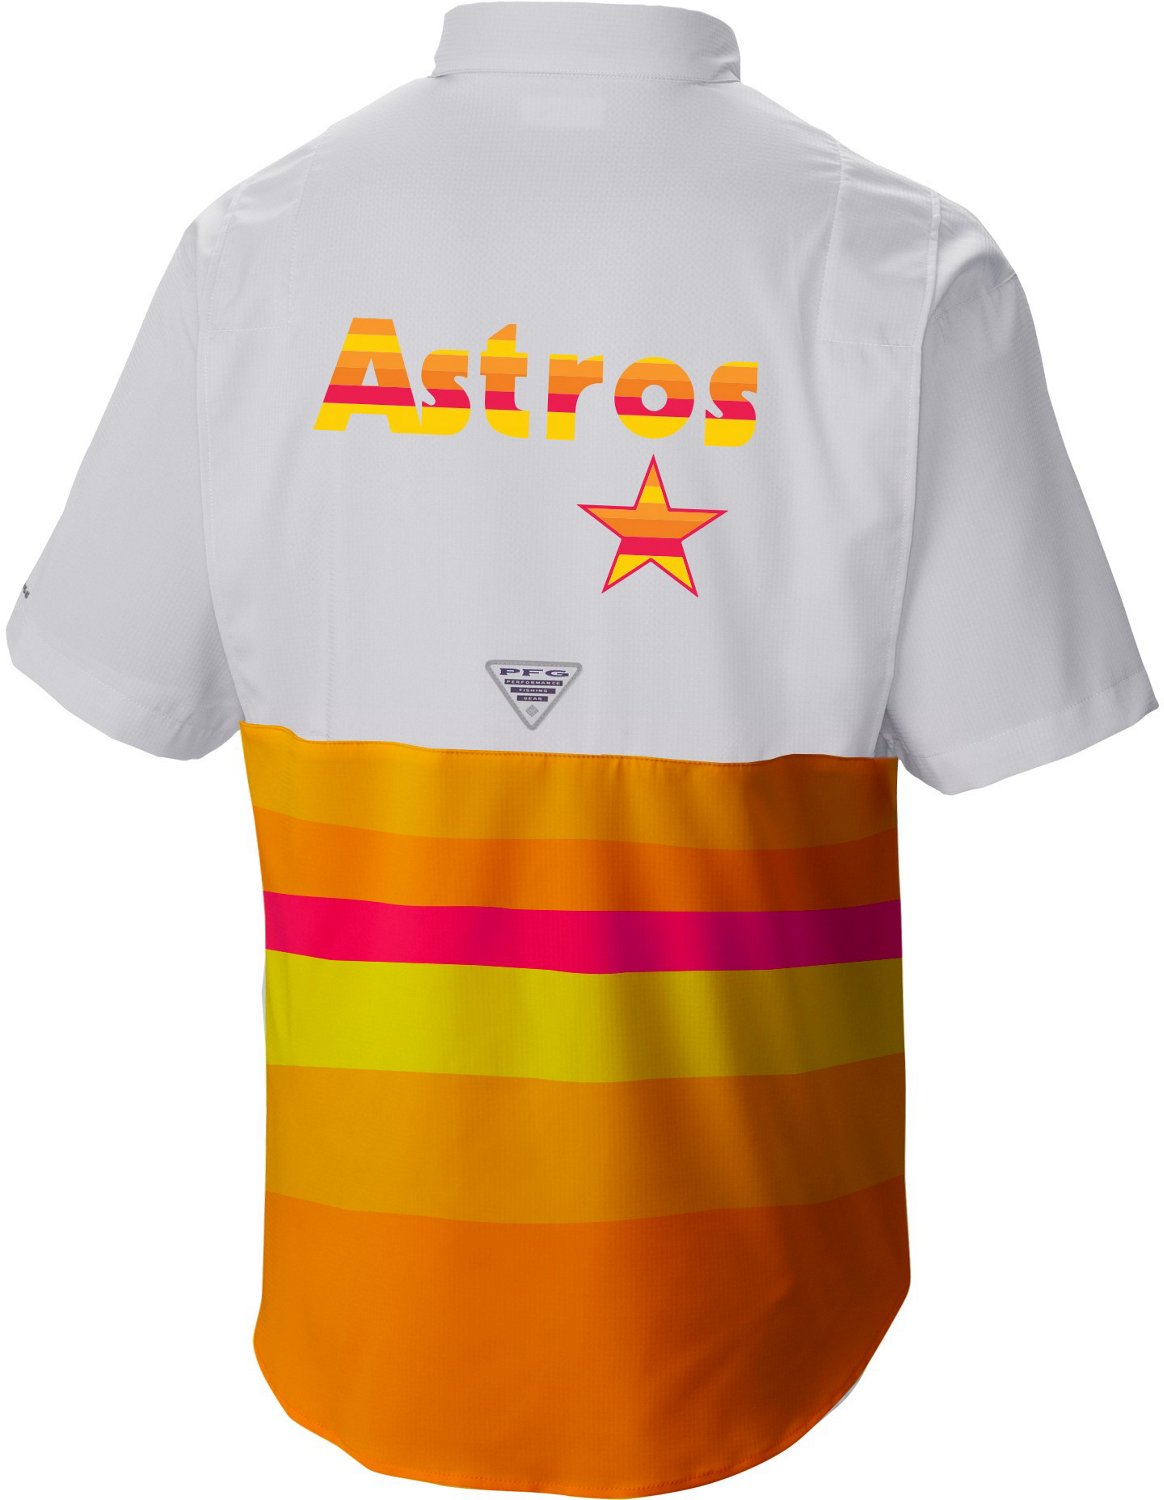 astros pfg shirt